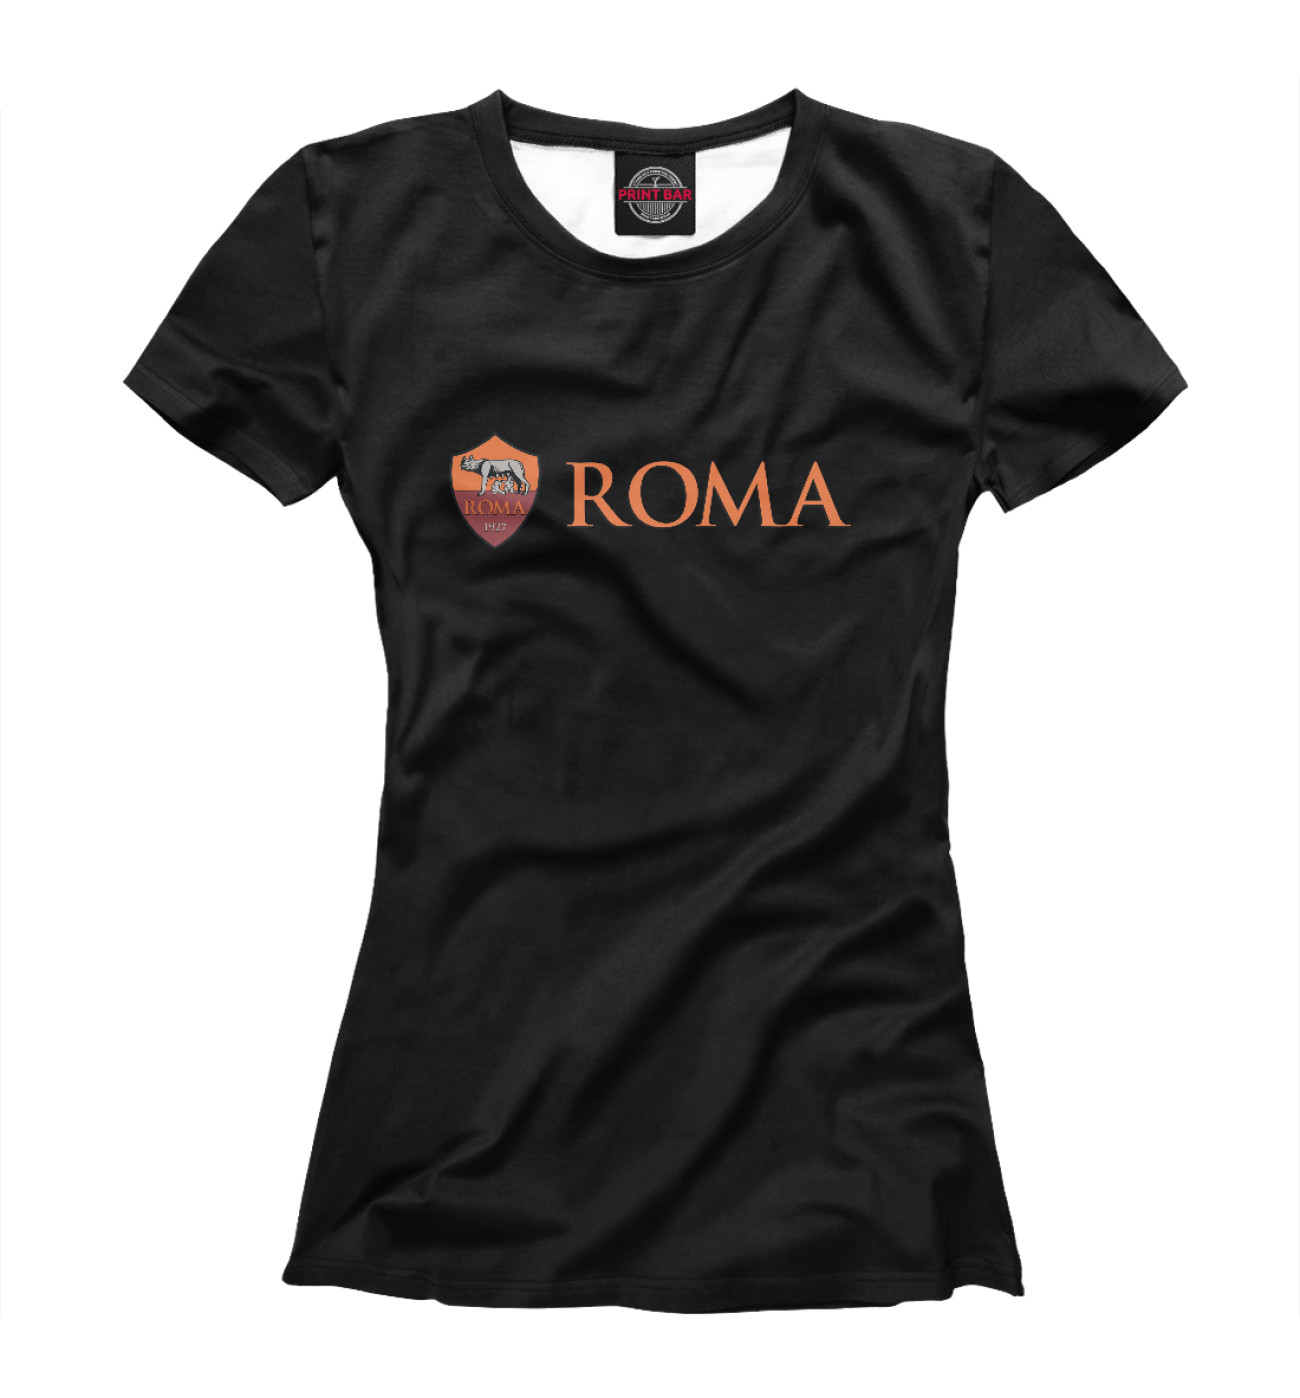 Женская Футболка Roma, артикул: RMA-845725-fut-1